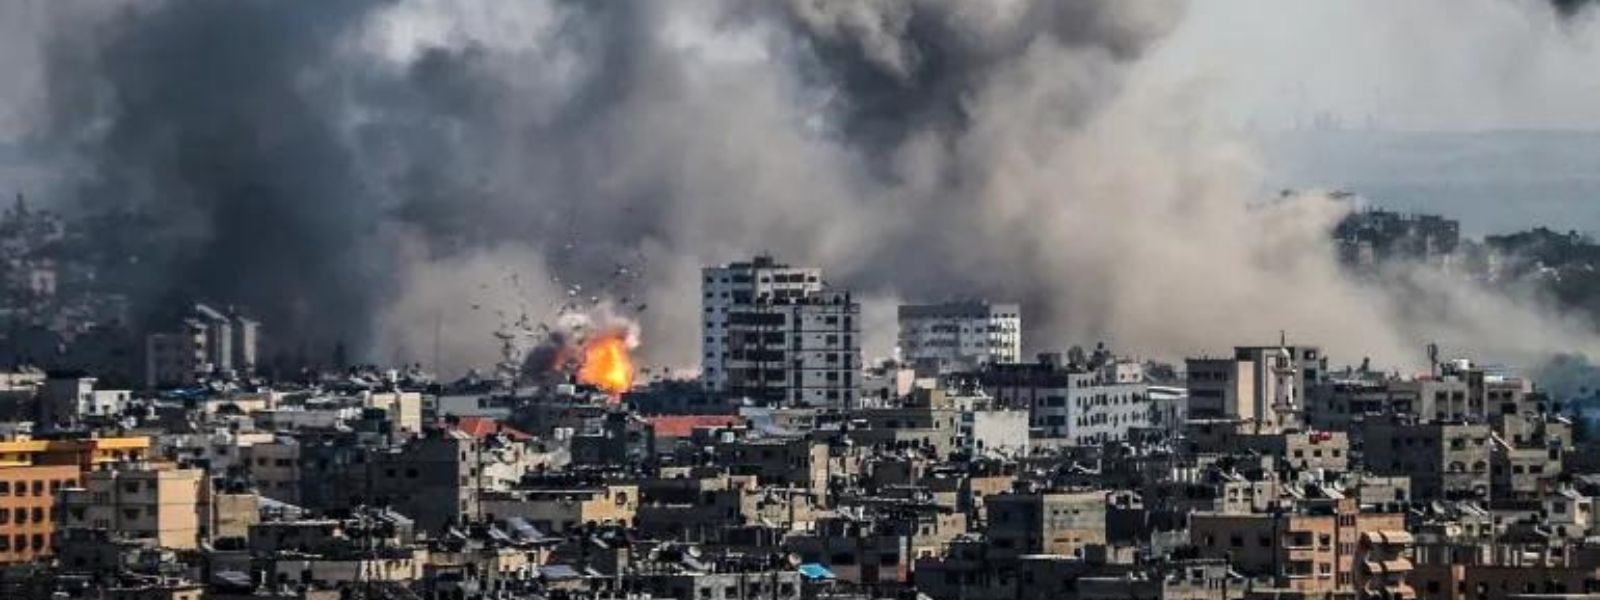 Another Sri Lankan dead in Israel - Hamas War